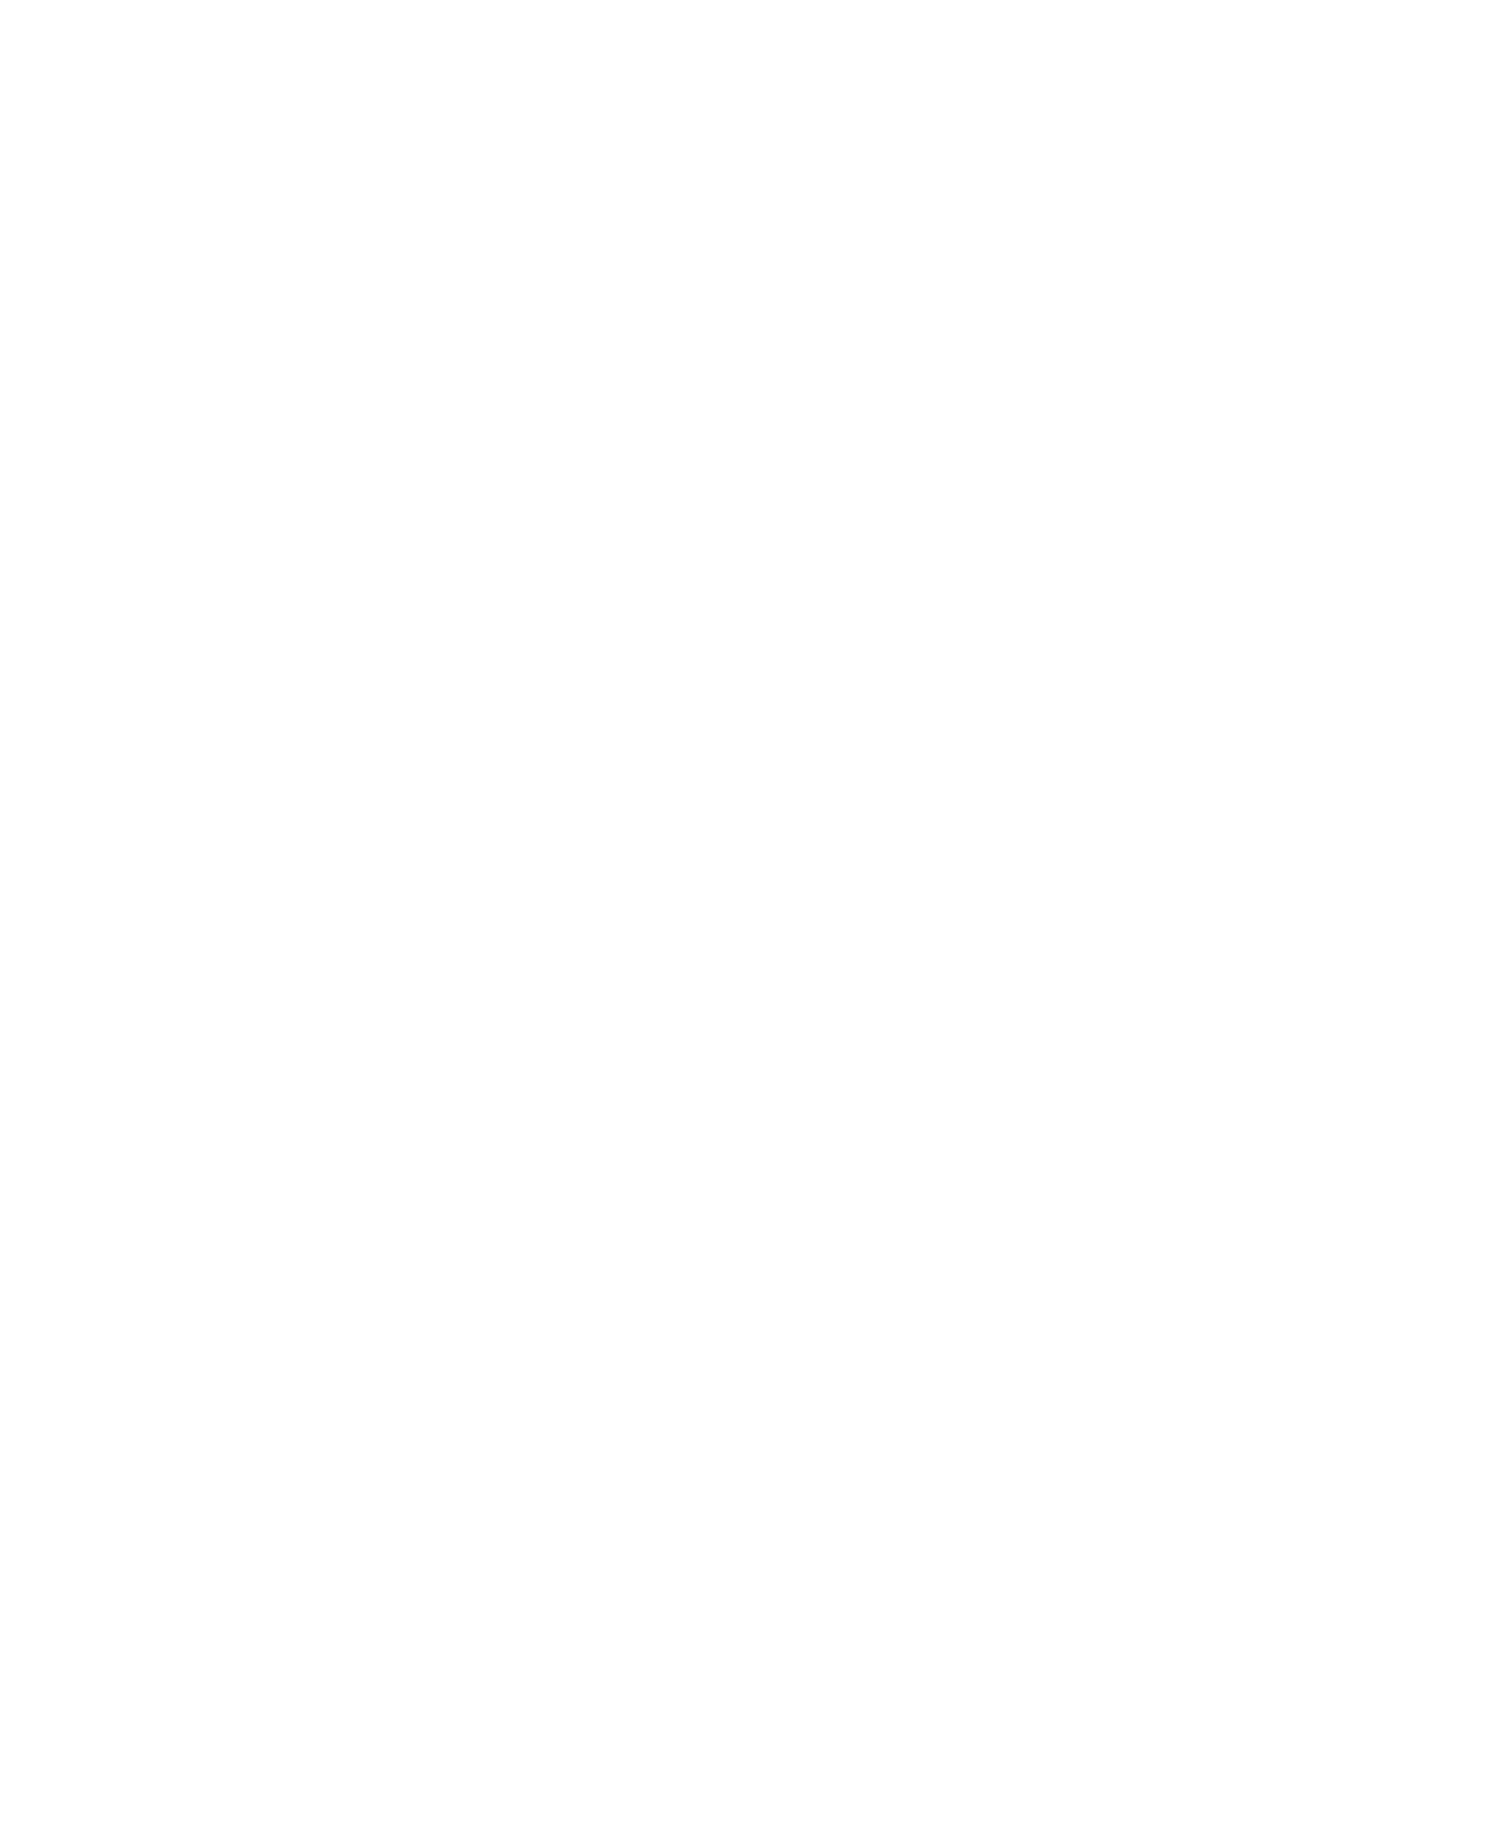 Esteban Restaurant Sydney - Best Mexican Food & Tequila Mezcal Selection in Sydney